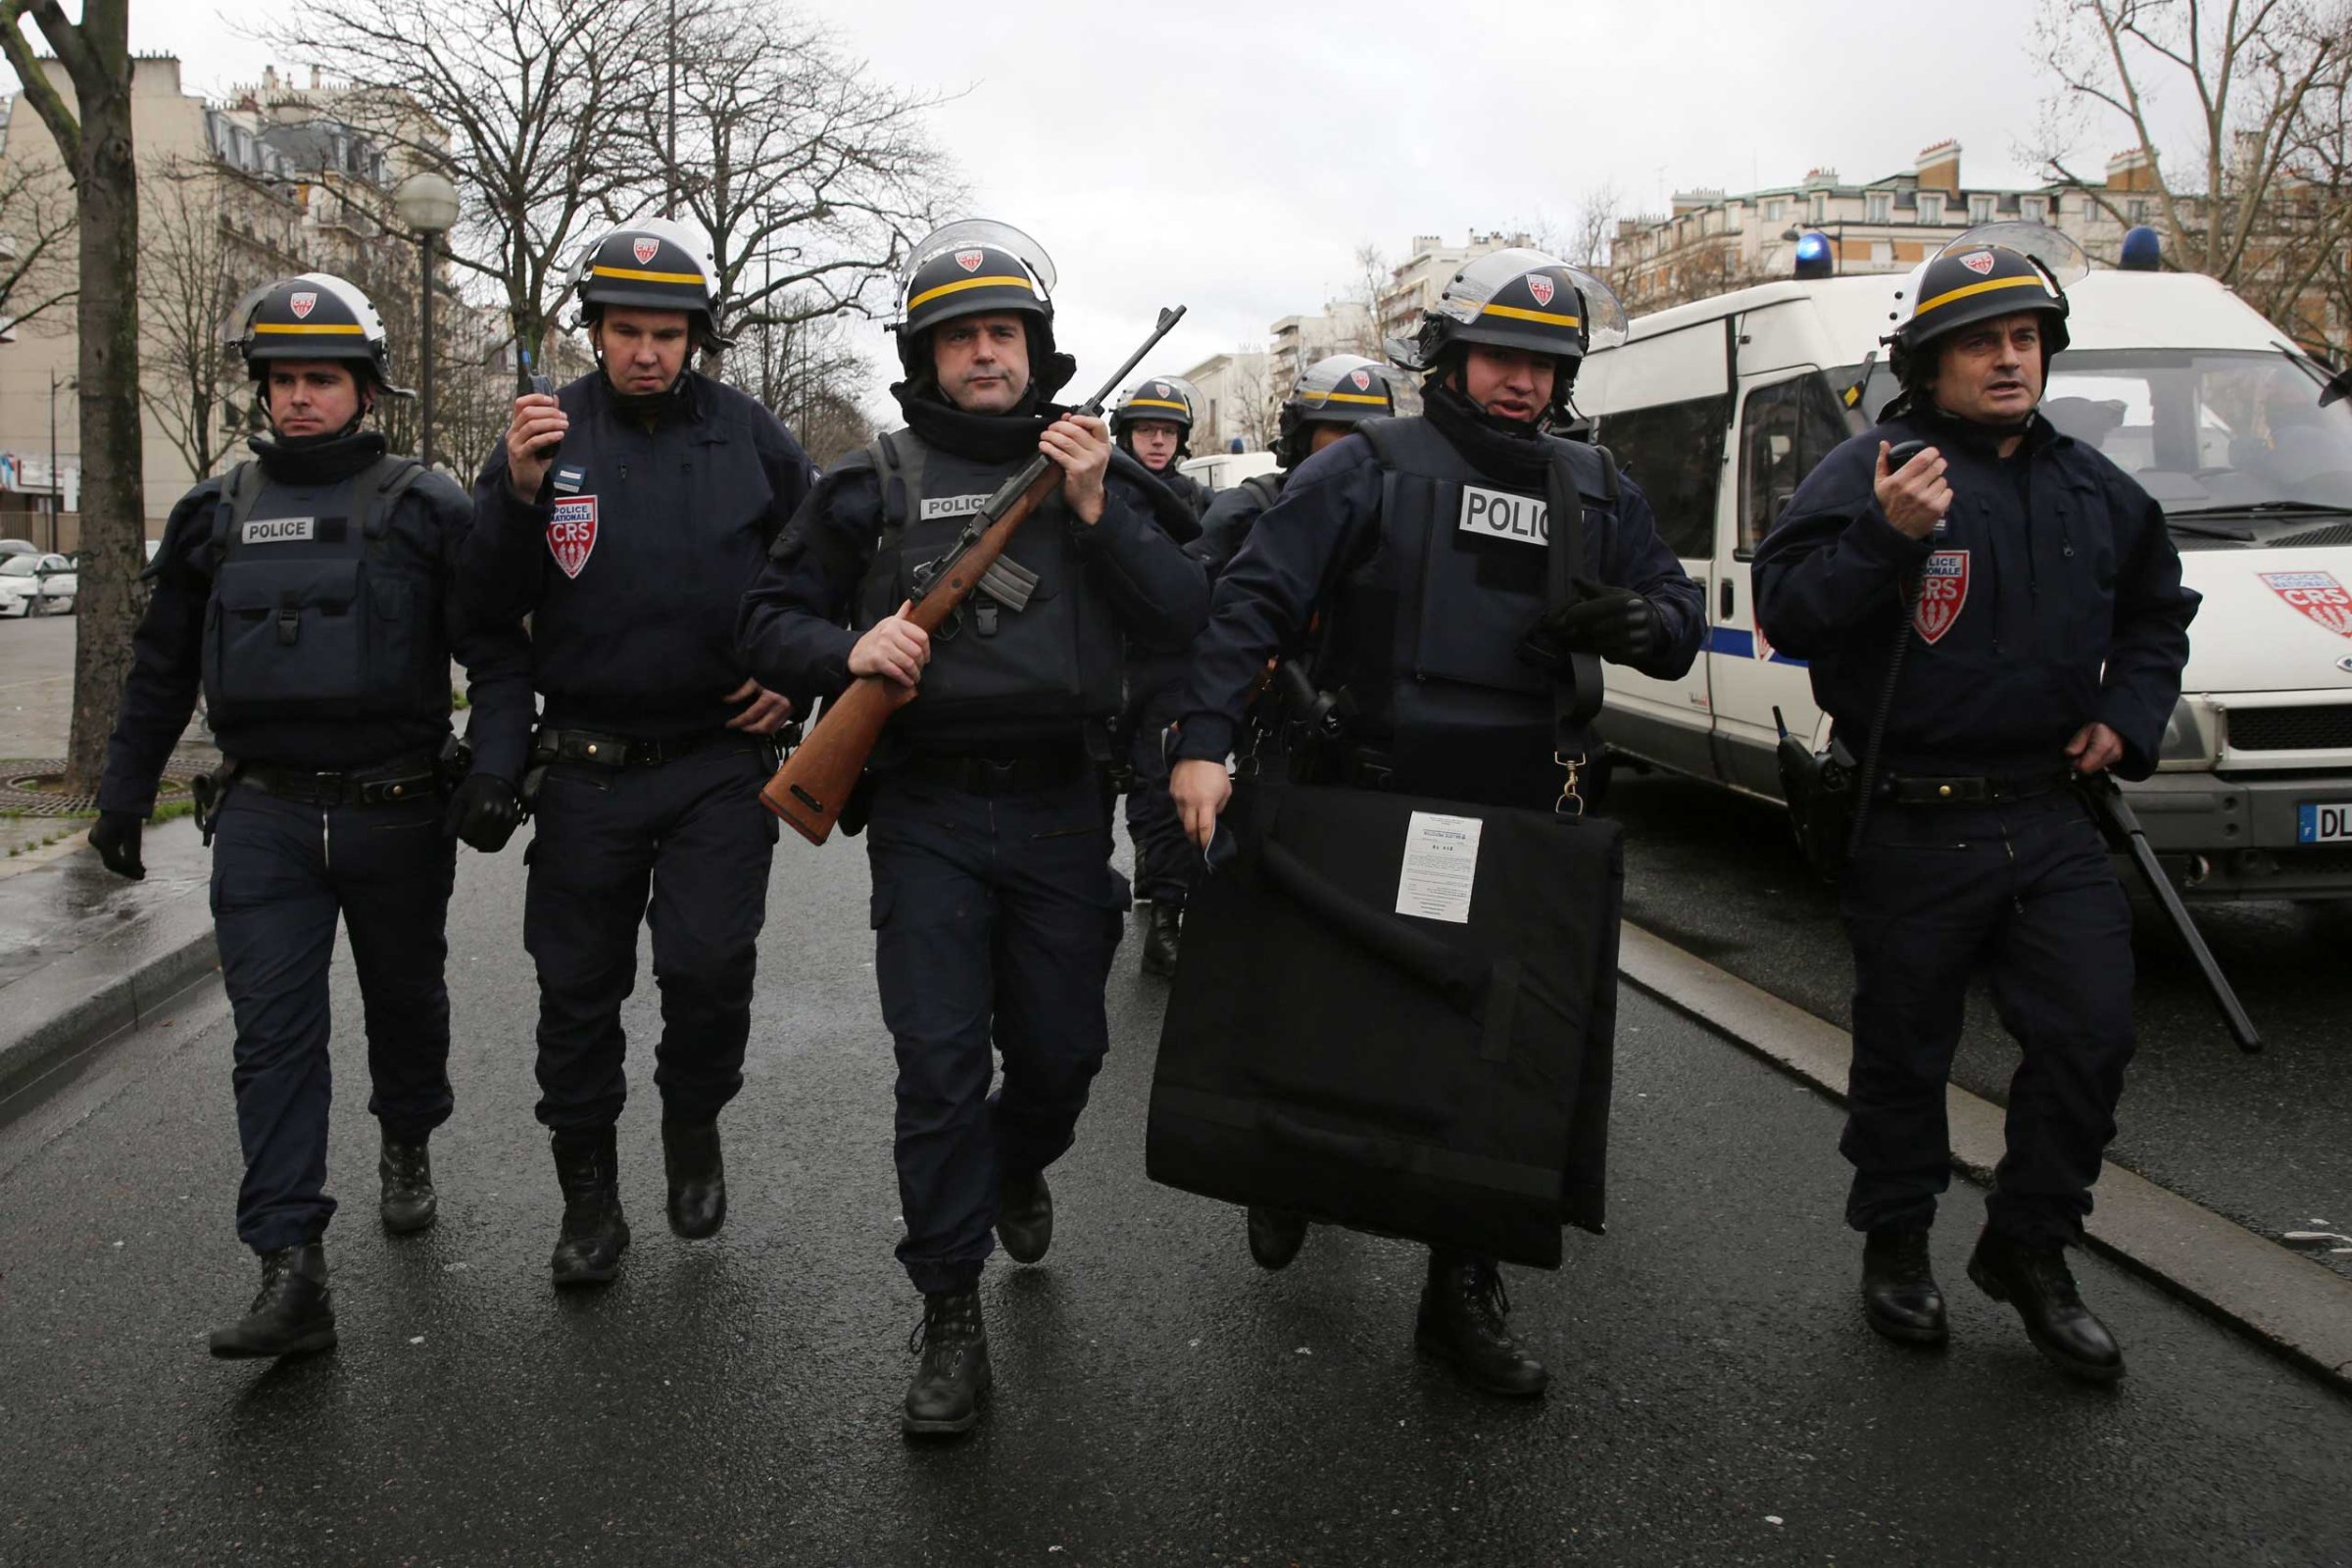 Police arrive with guns at Port de Vincennes on Jan. 9, 2015 in Paris.